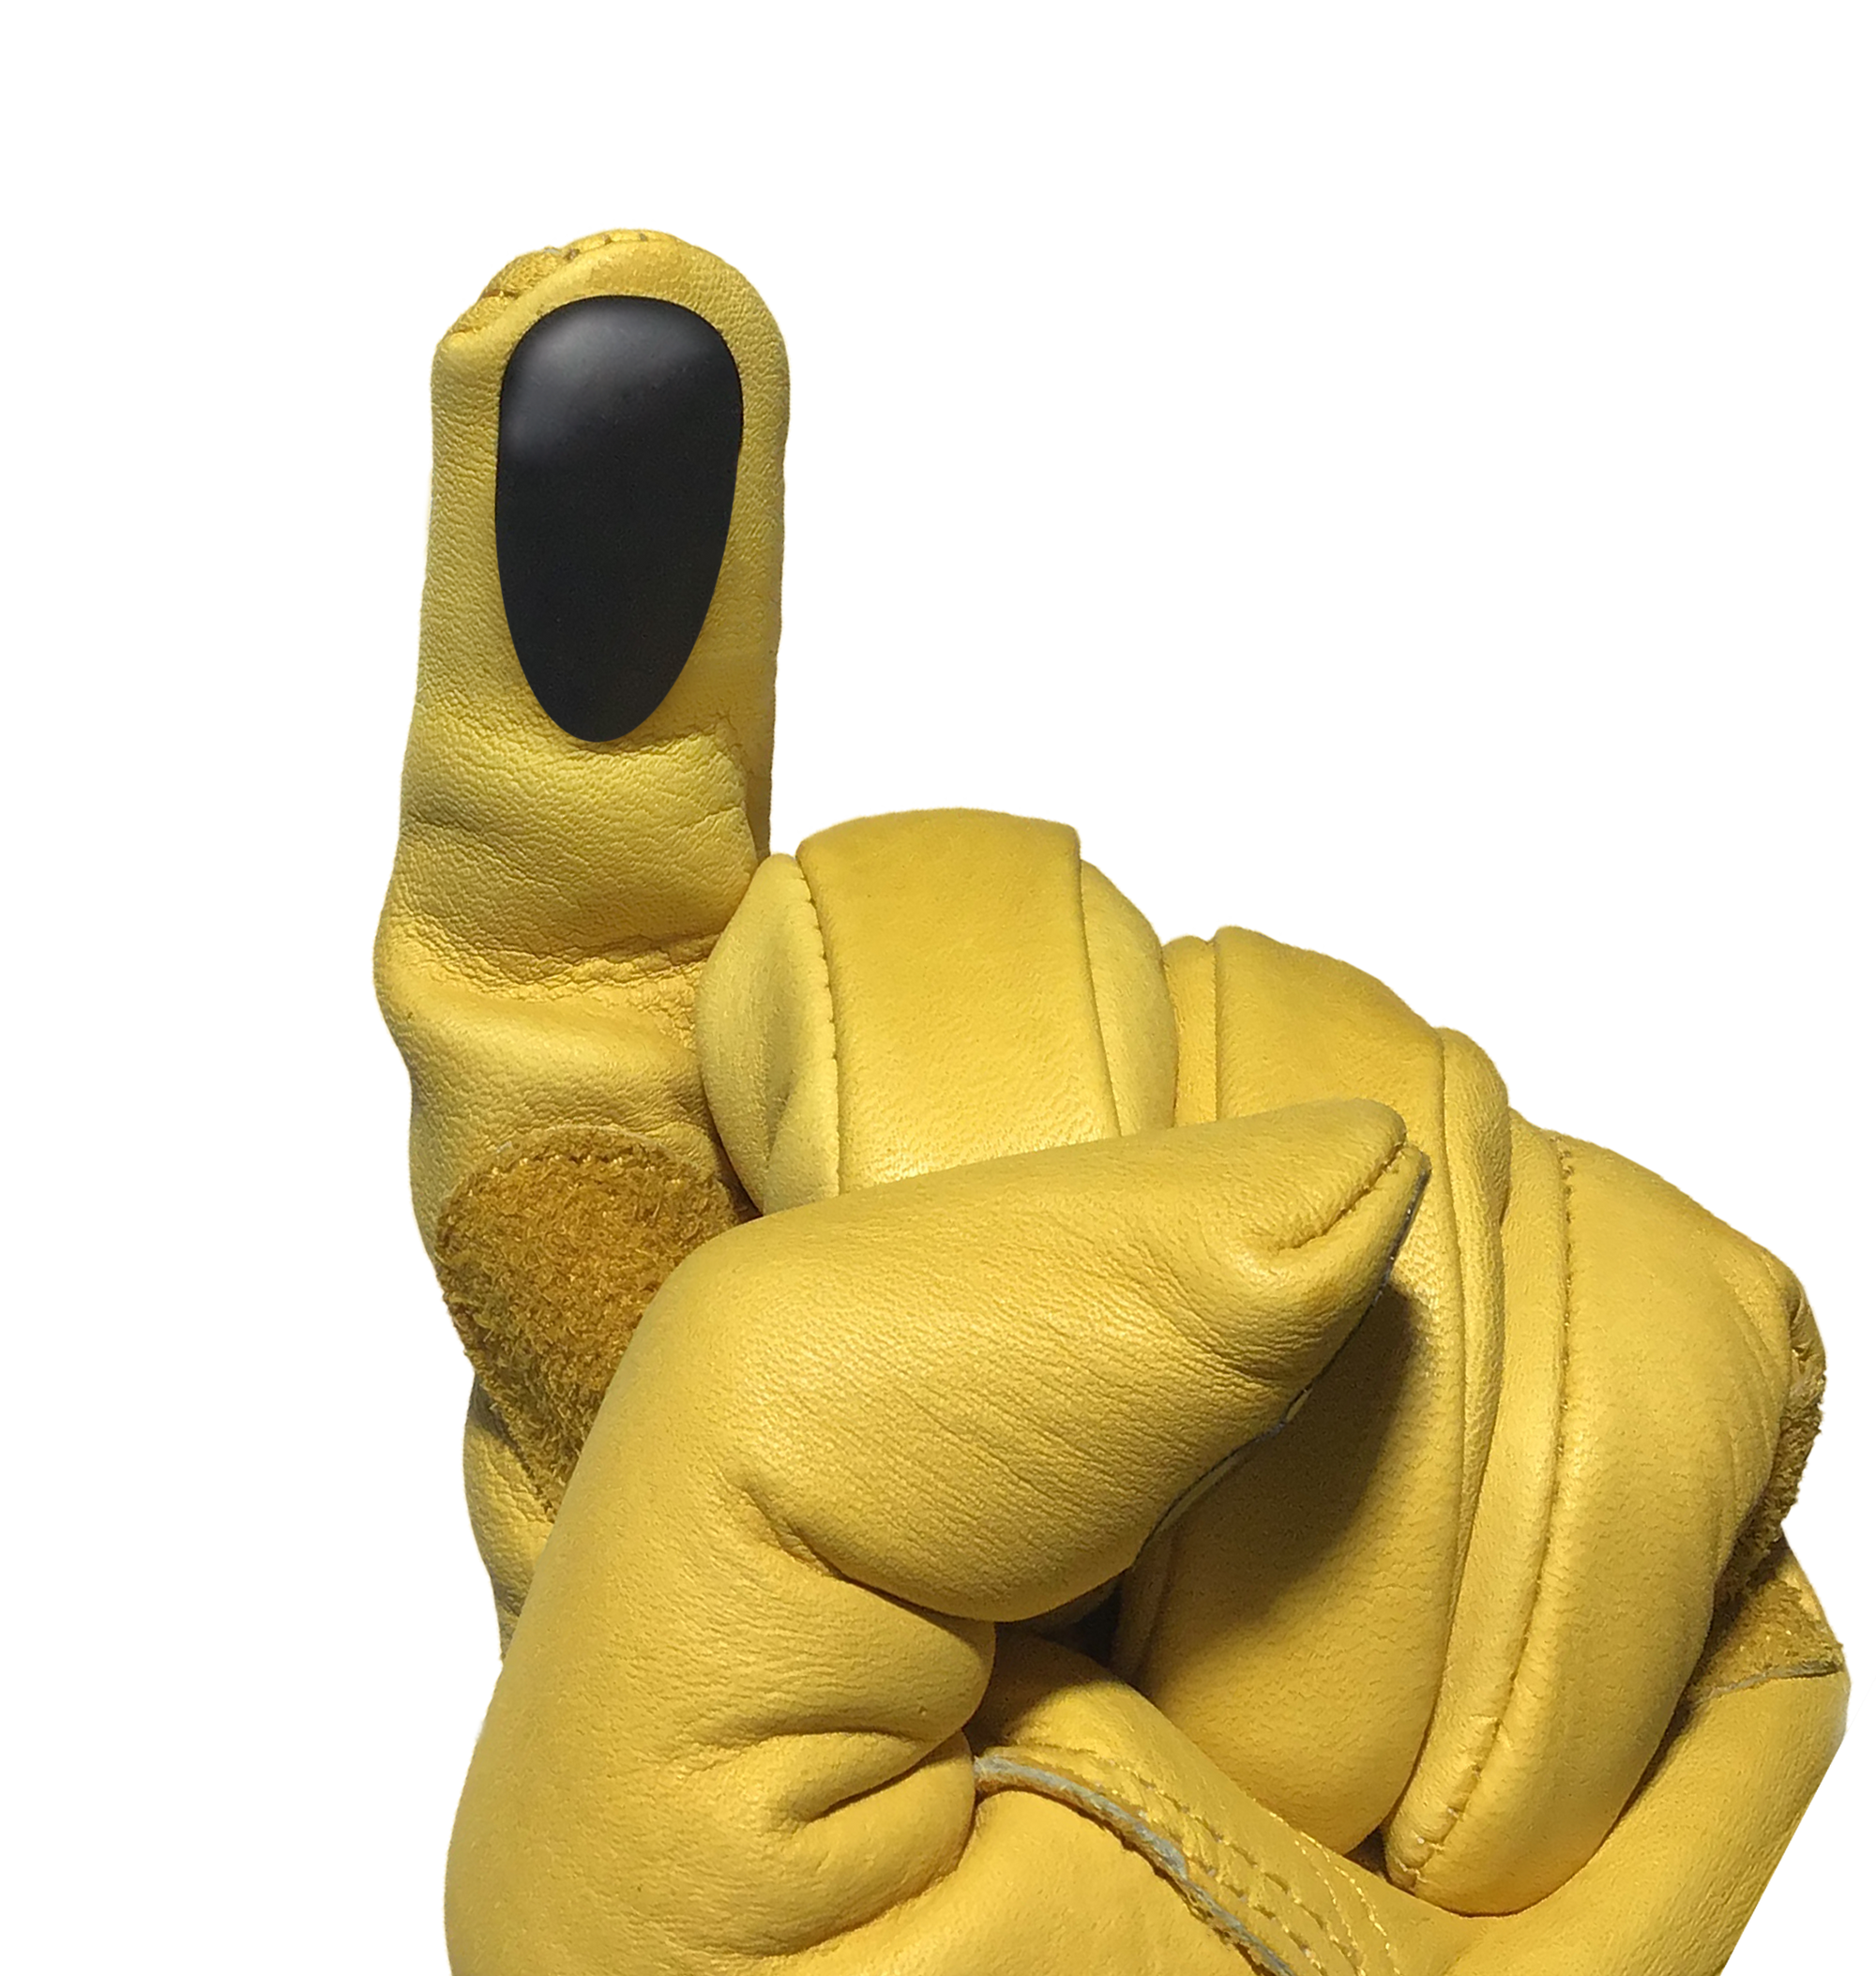 GloveTacts on leather work glove